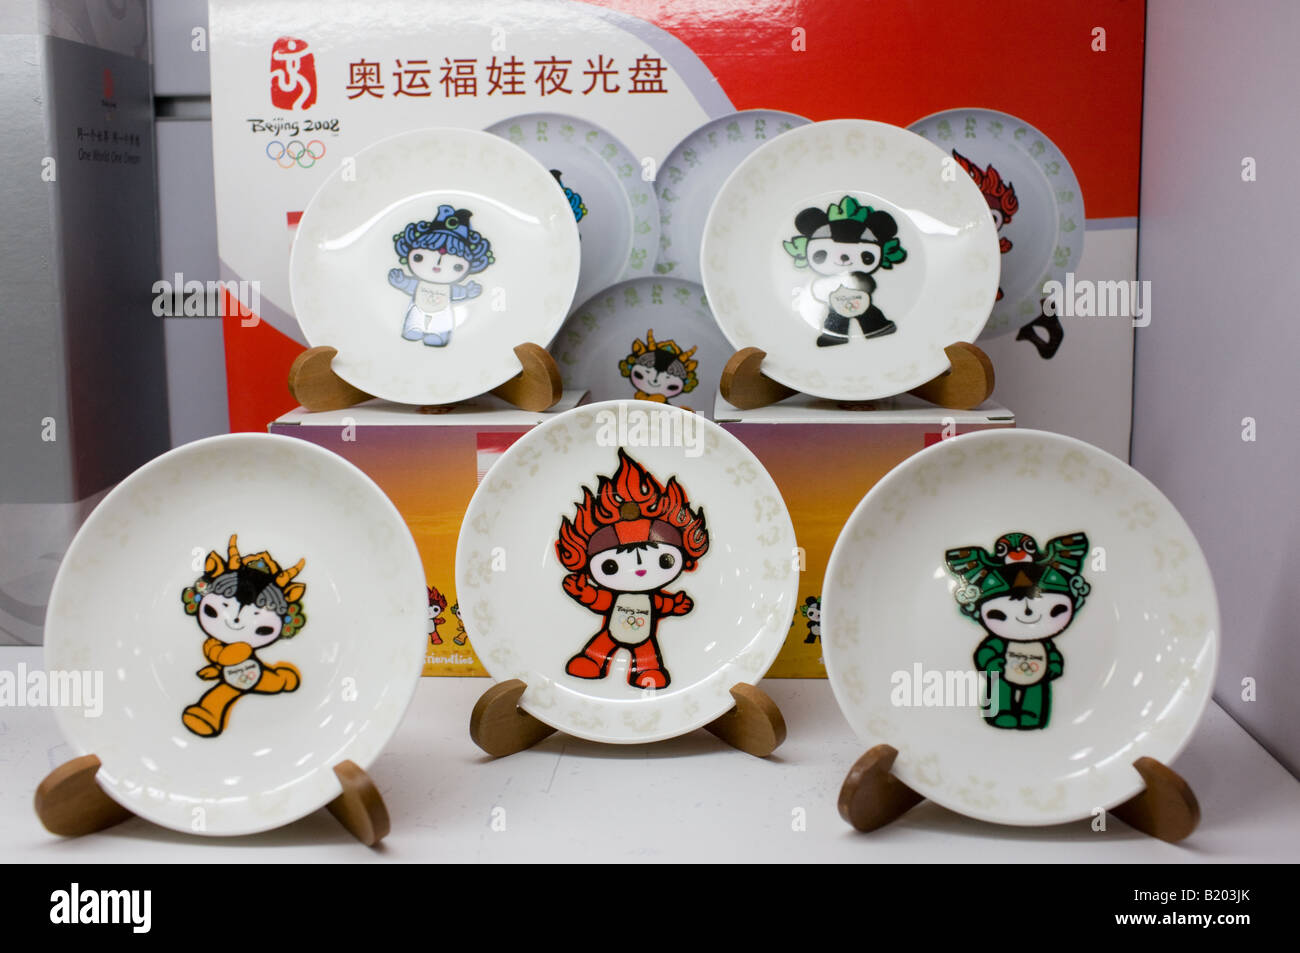 2008 Olympischen Spielen offizielle Fuwa Maskottchen Charakter Platten im Souvenir shop Wangfujing Street Peking China Stockfoto